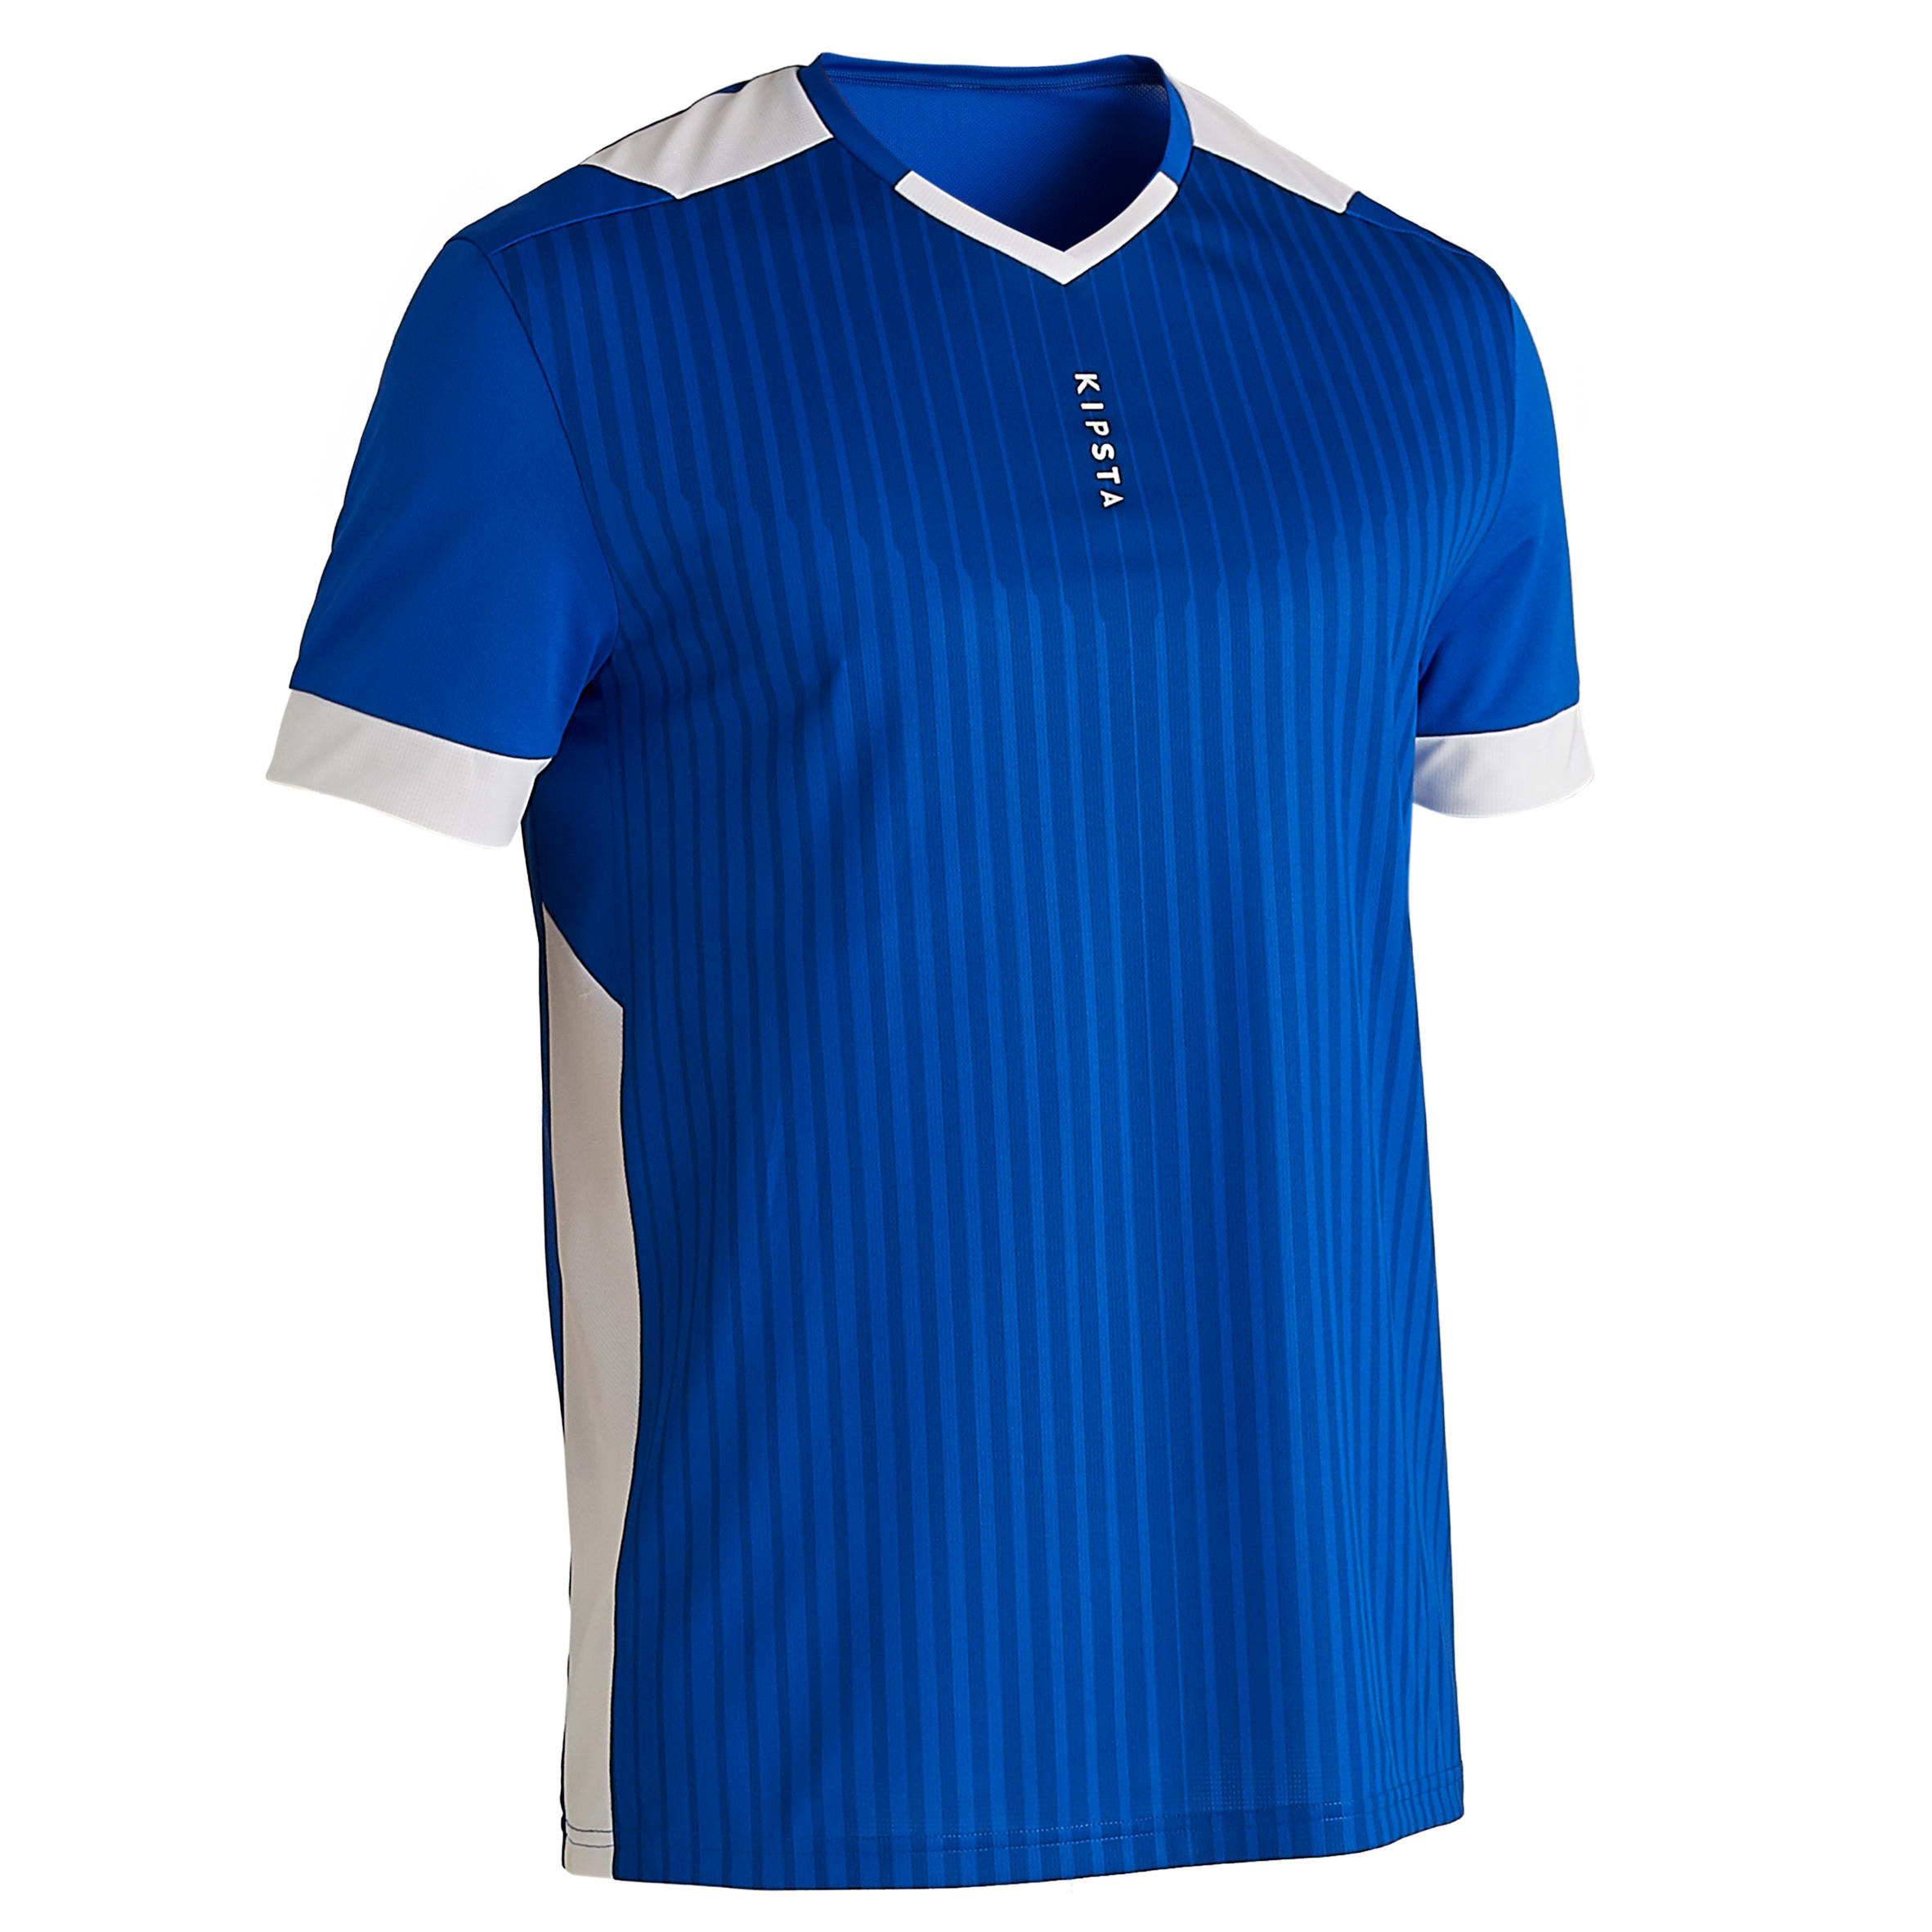 KIPSTA Adult Football Shirt F500 - Blue